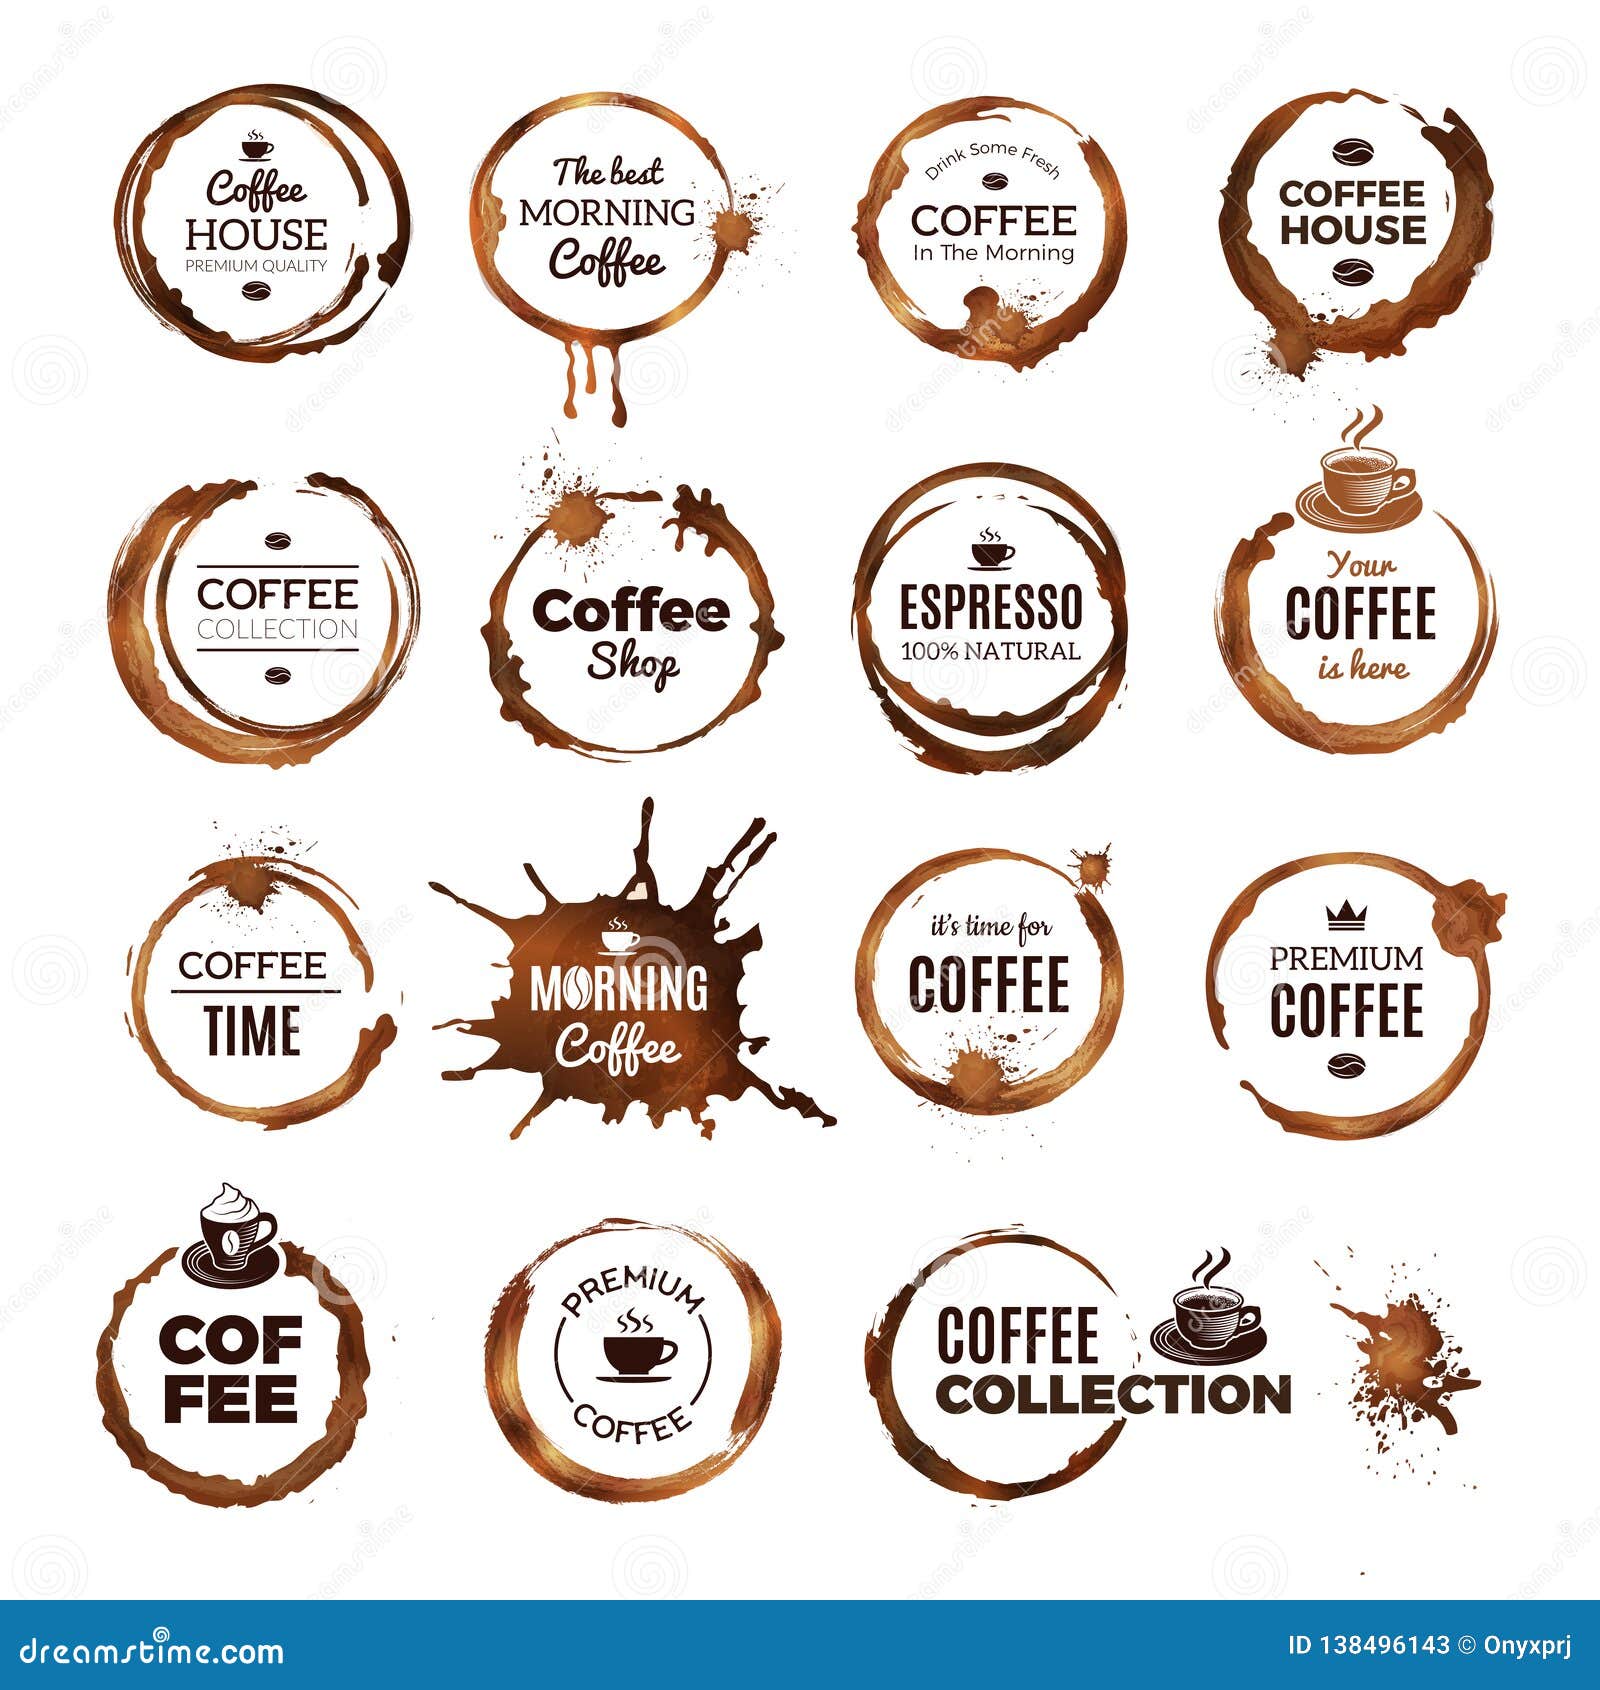 Premium Vector  Cute coffee mug with face illustration design template  vector